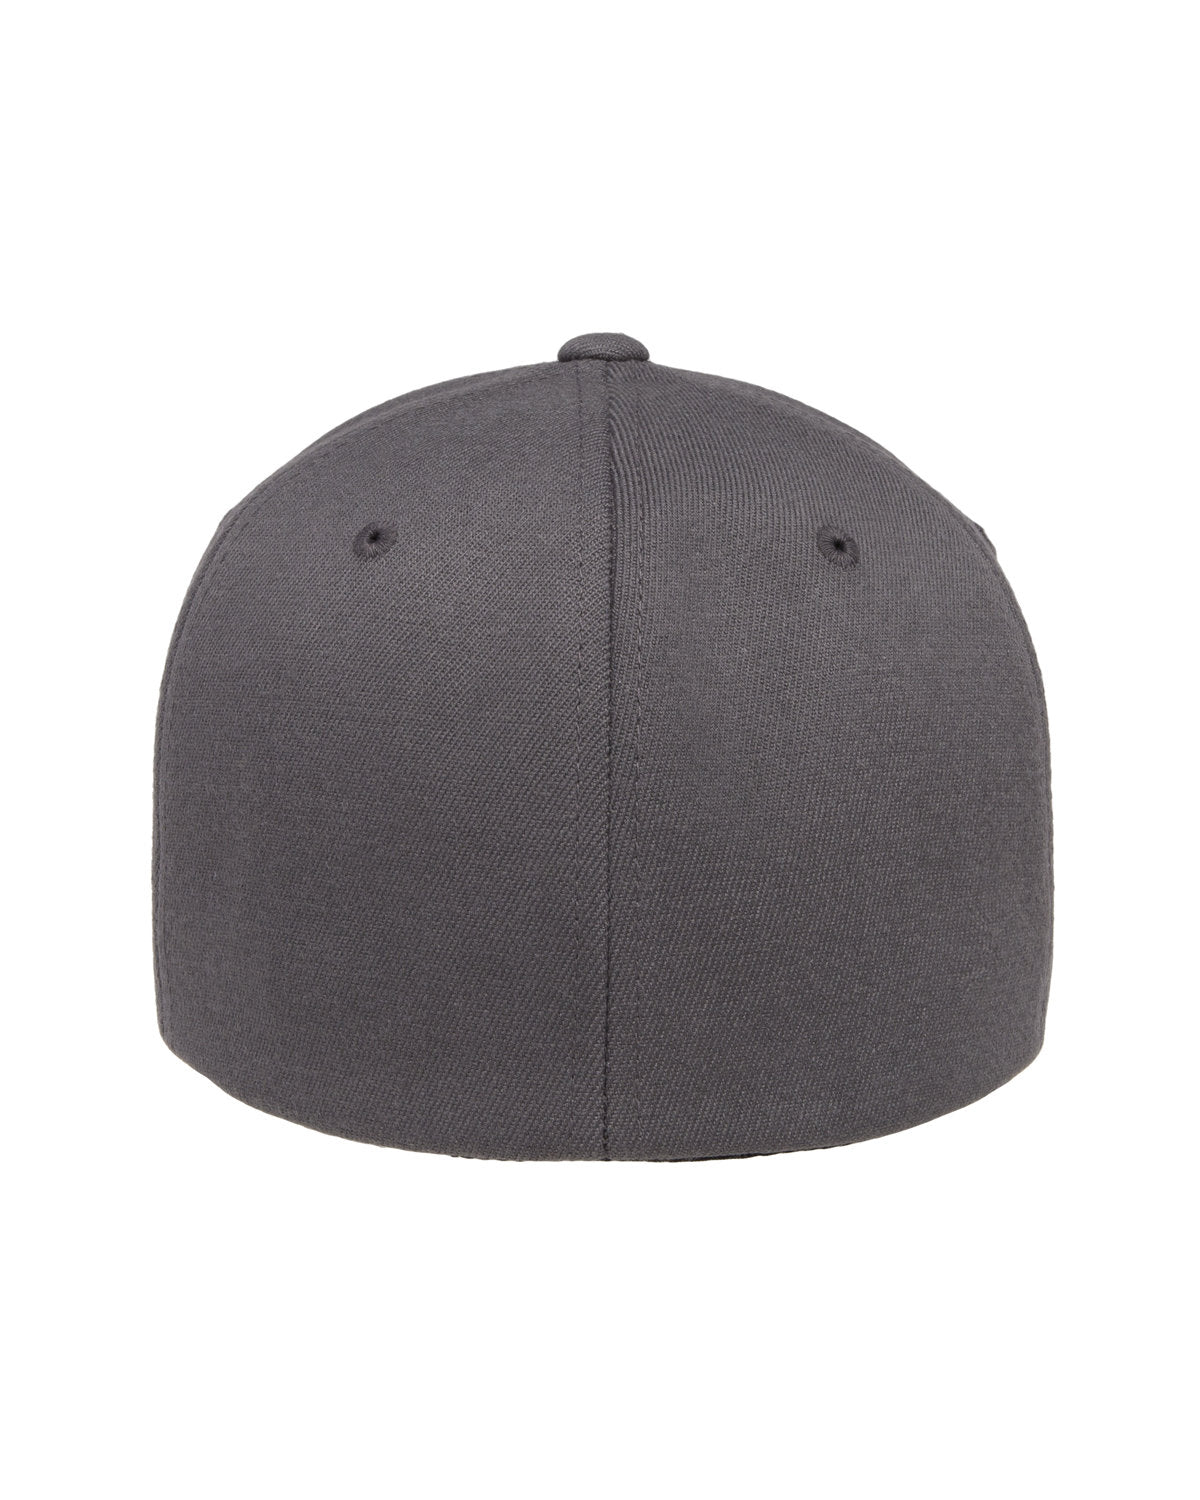 Flexfit Wool Blend Custom Caps, Grey